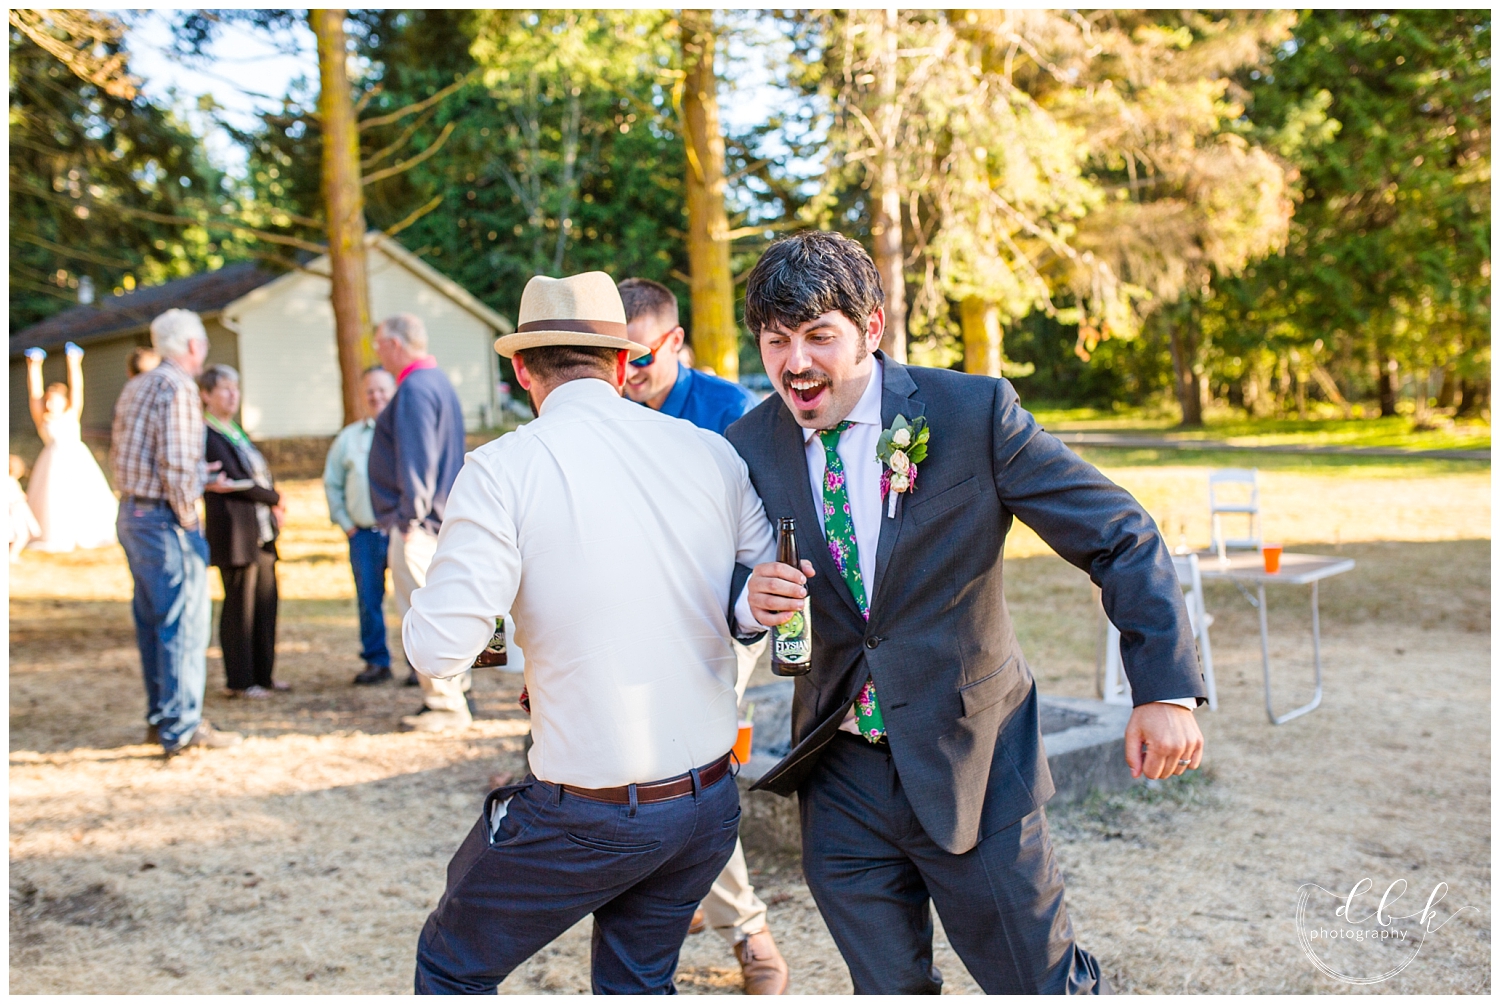 groom swinging around with groomsman during wedding reception at Washington Park picnic area in Anacortes, Washington